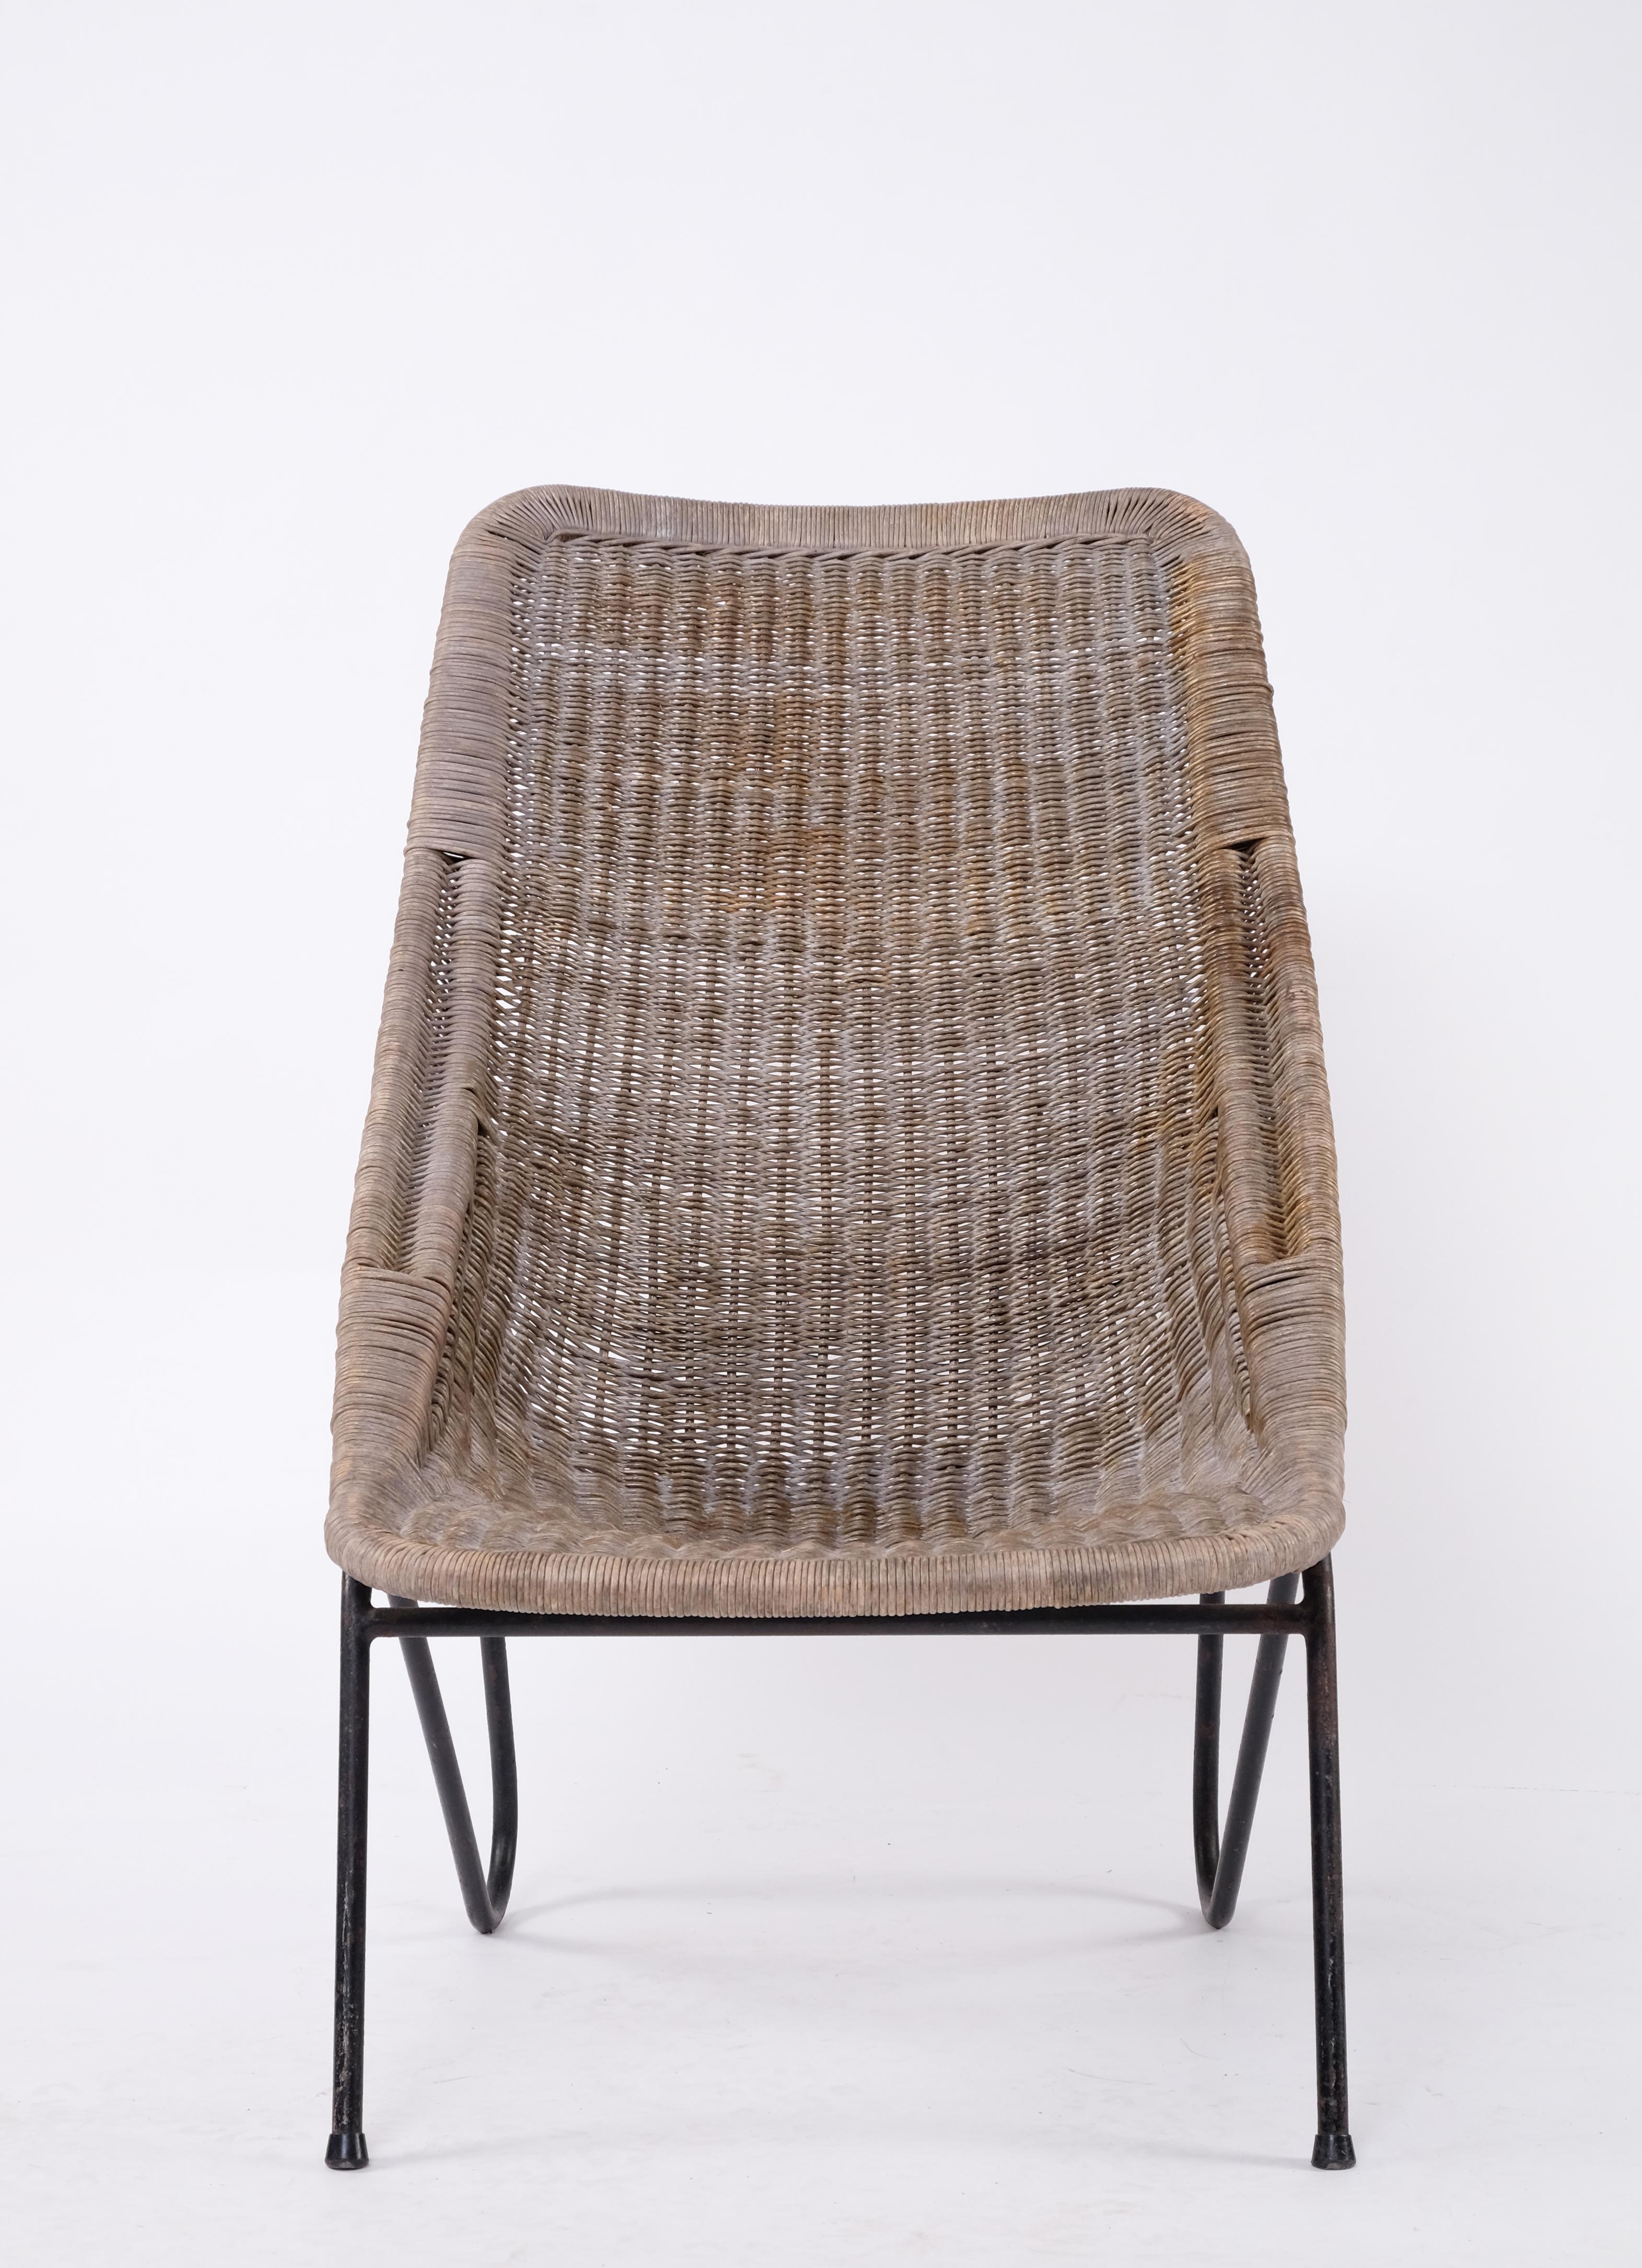 Steel Swedish Rattan Chair, 1960s